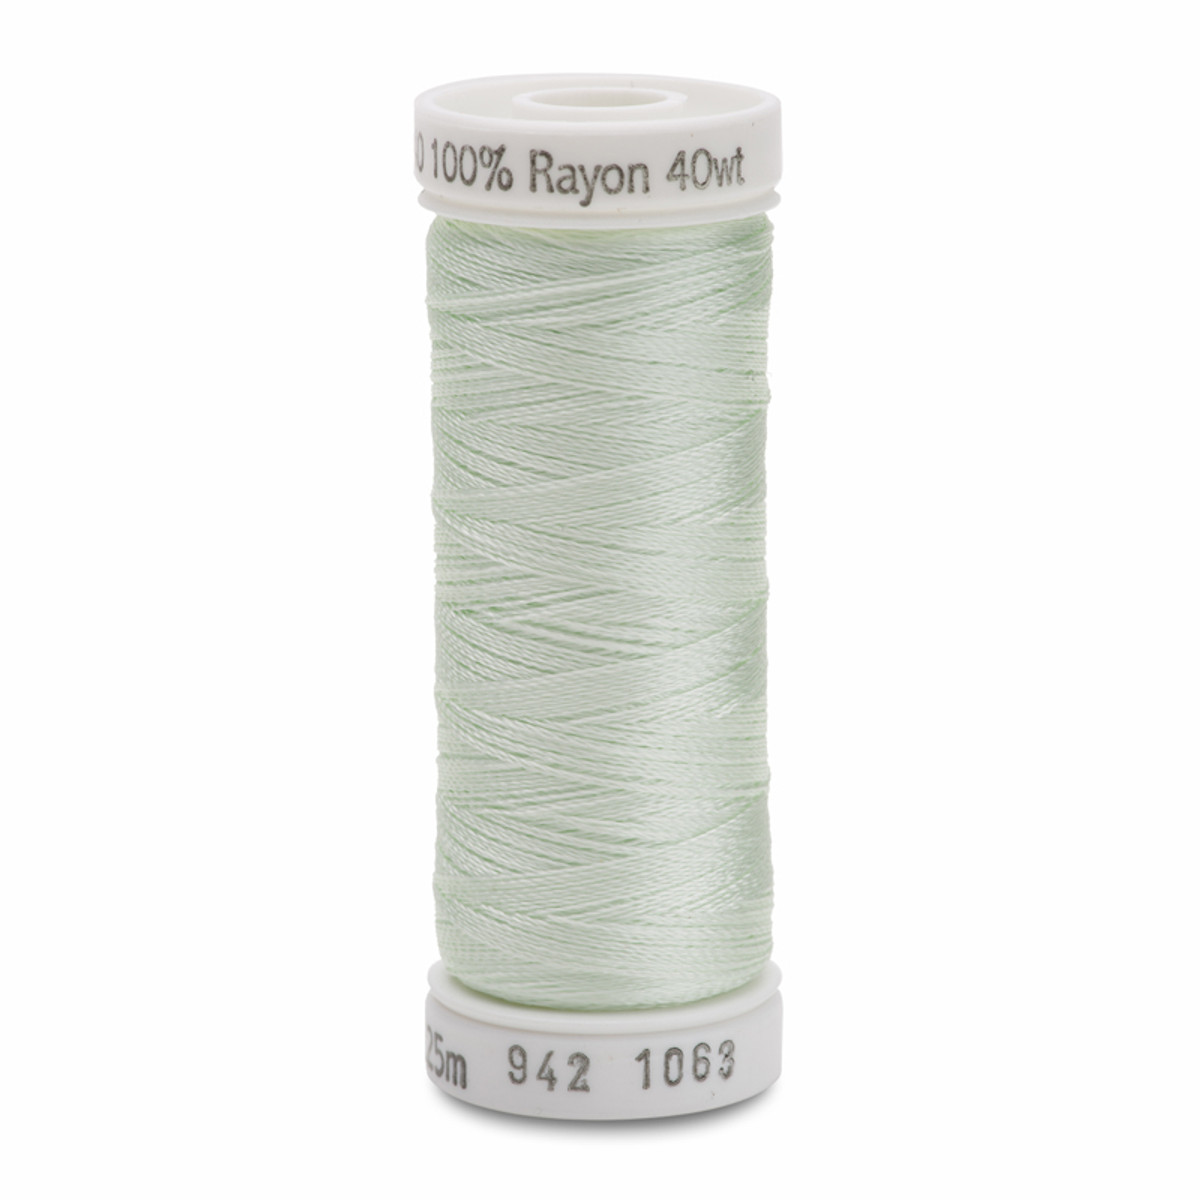 Sulky 40 Wt. Rayon Thread- Pale Yellow Green - 250 yd. Spool